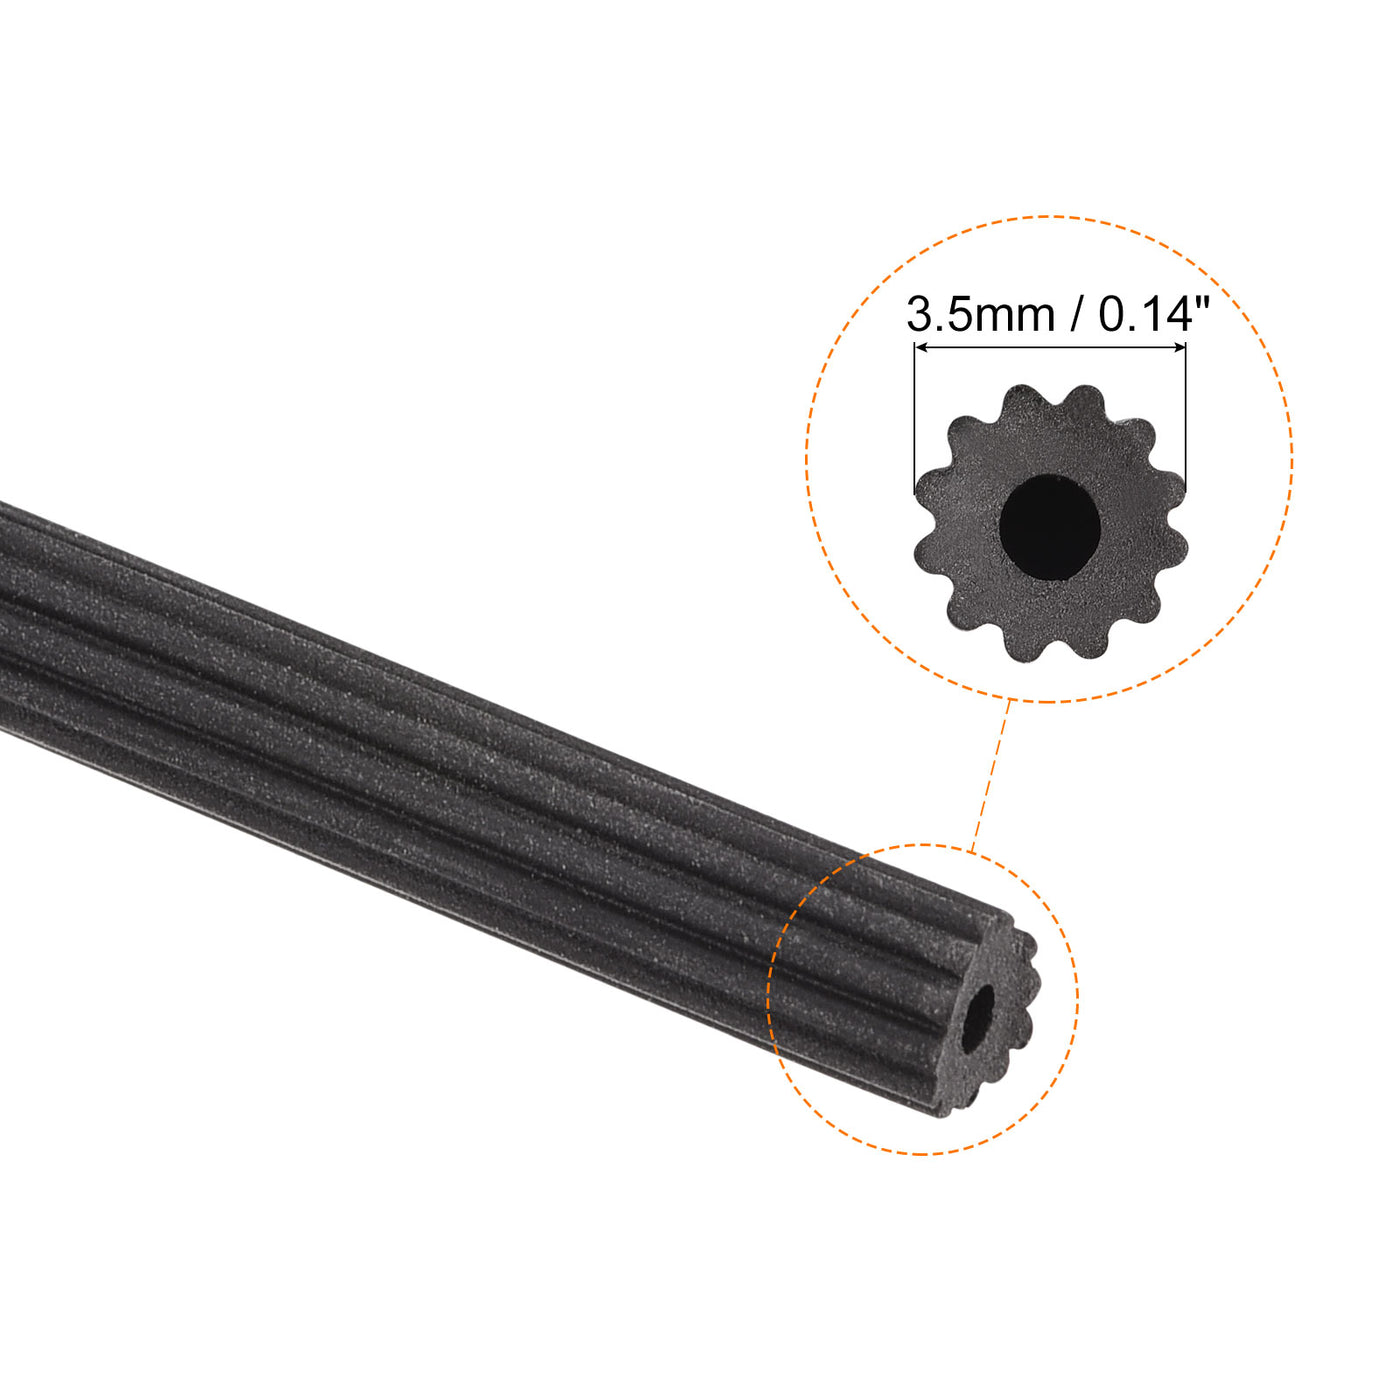 uxcell Uxcell Screen Spline 12M/39.37Ft Length PVC Sealing Strip Retainer, 3.5mm OD Black